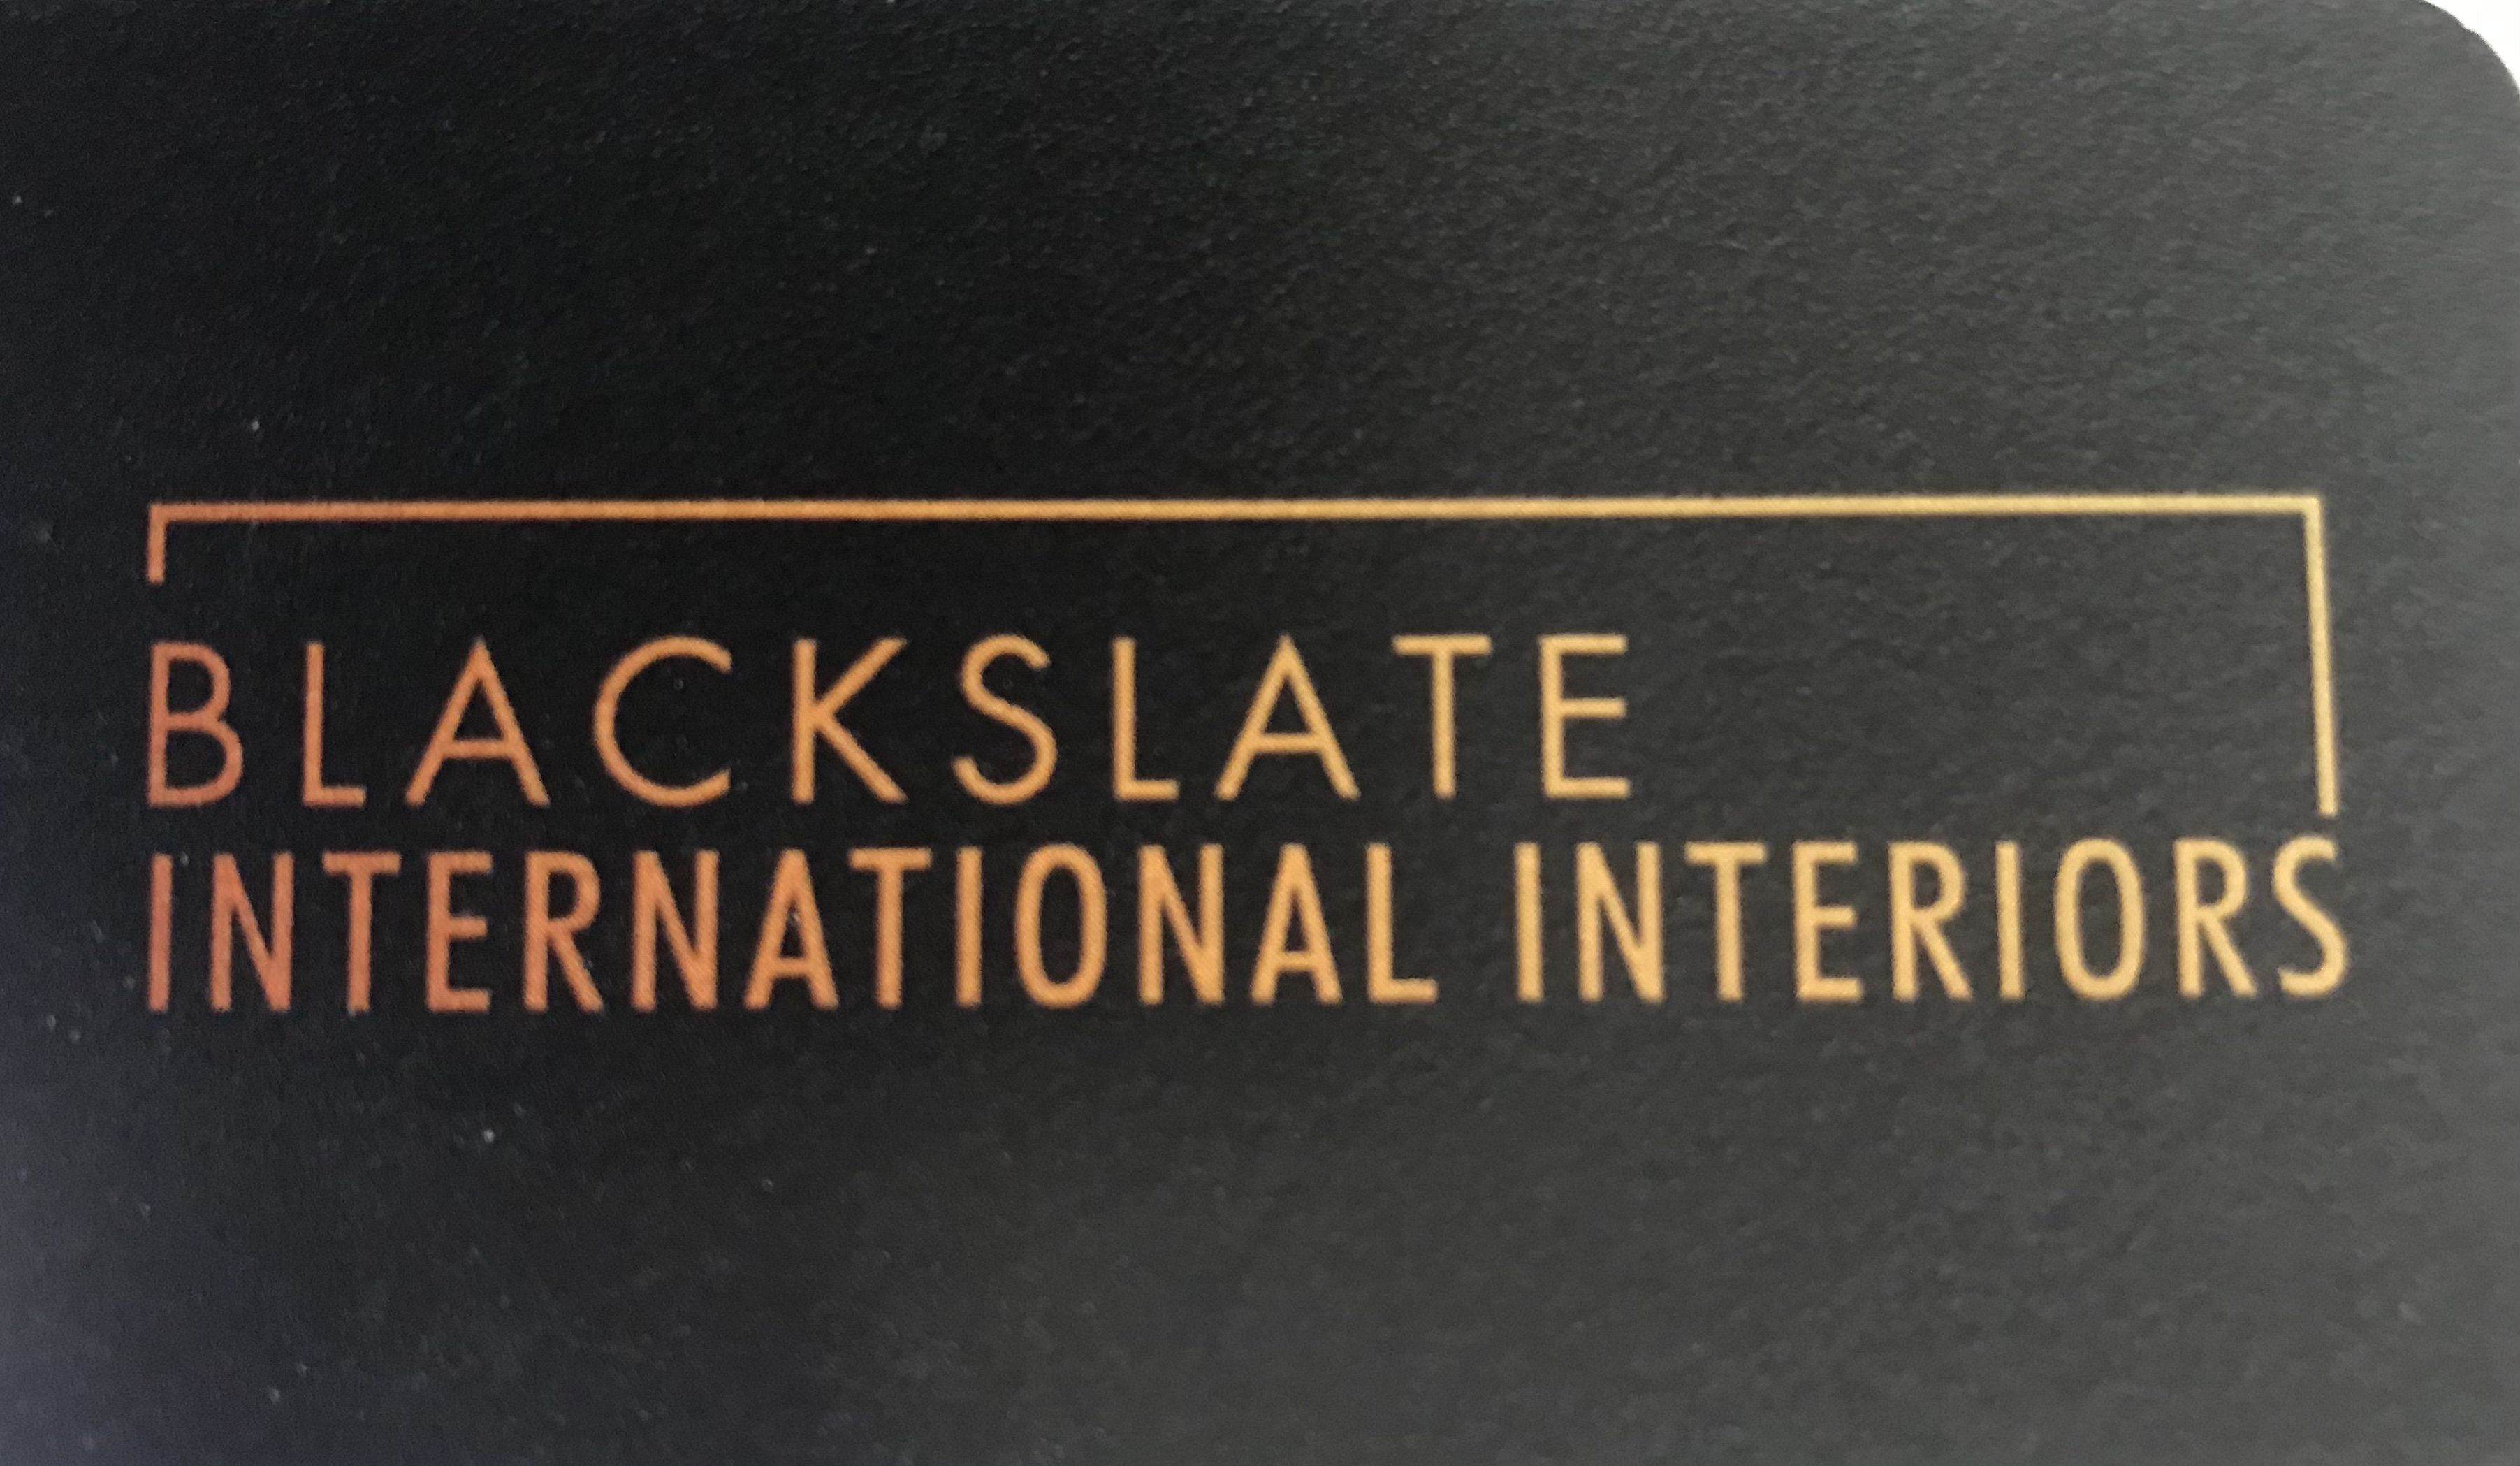 Blackslate International Interiors